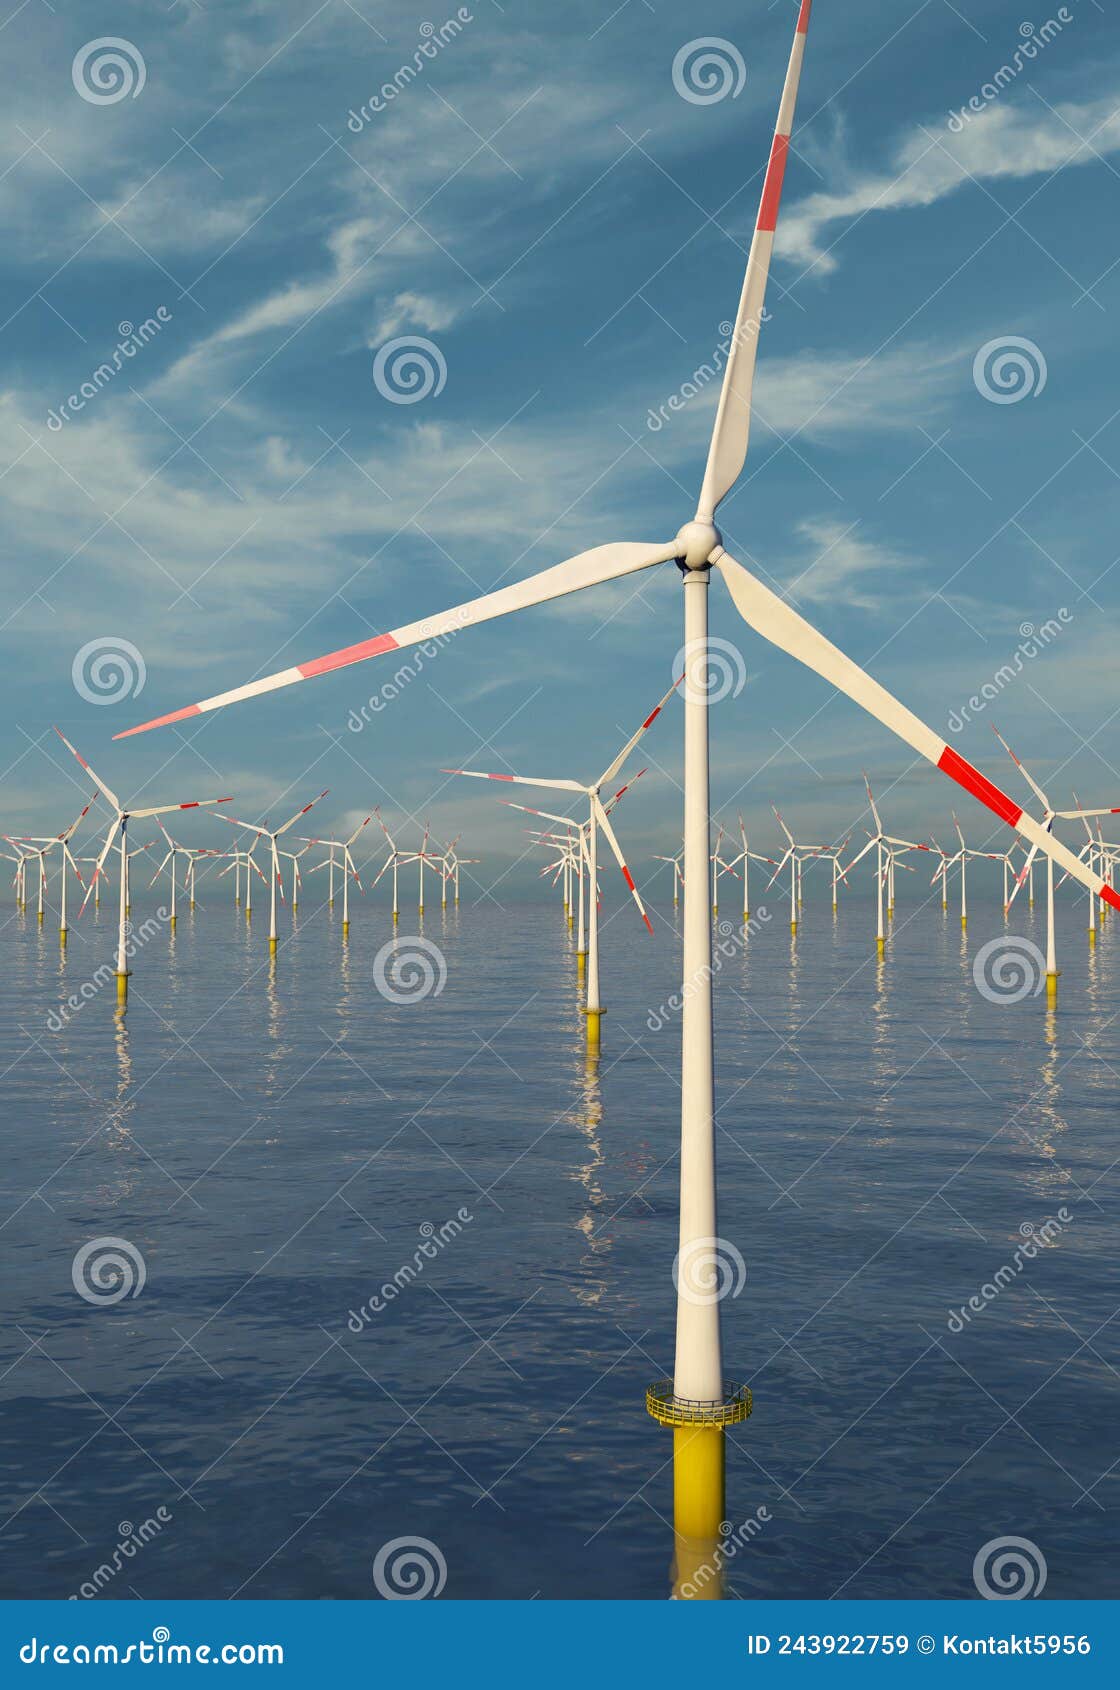 wind energy - offshore wind farm